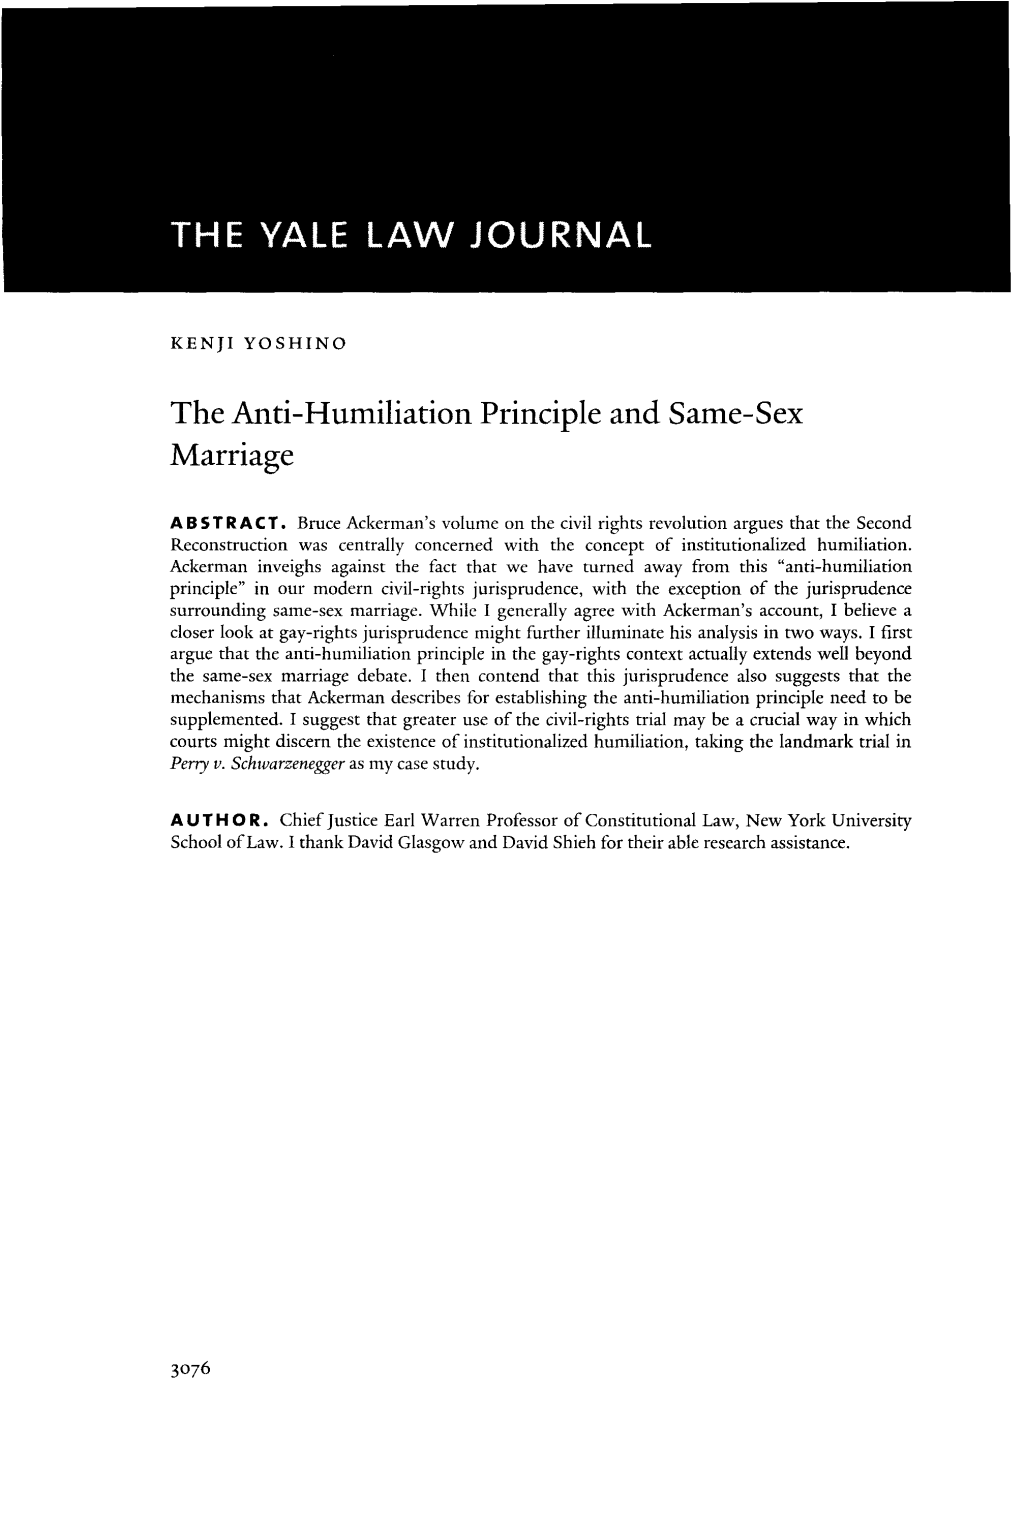 The Anti-Humiliation Principle and Same-Sex Marriage